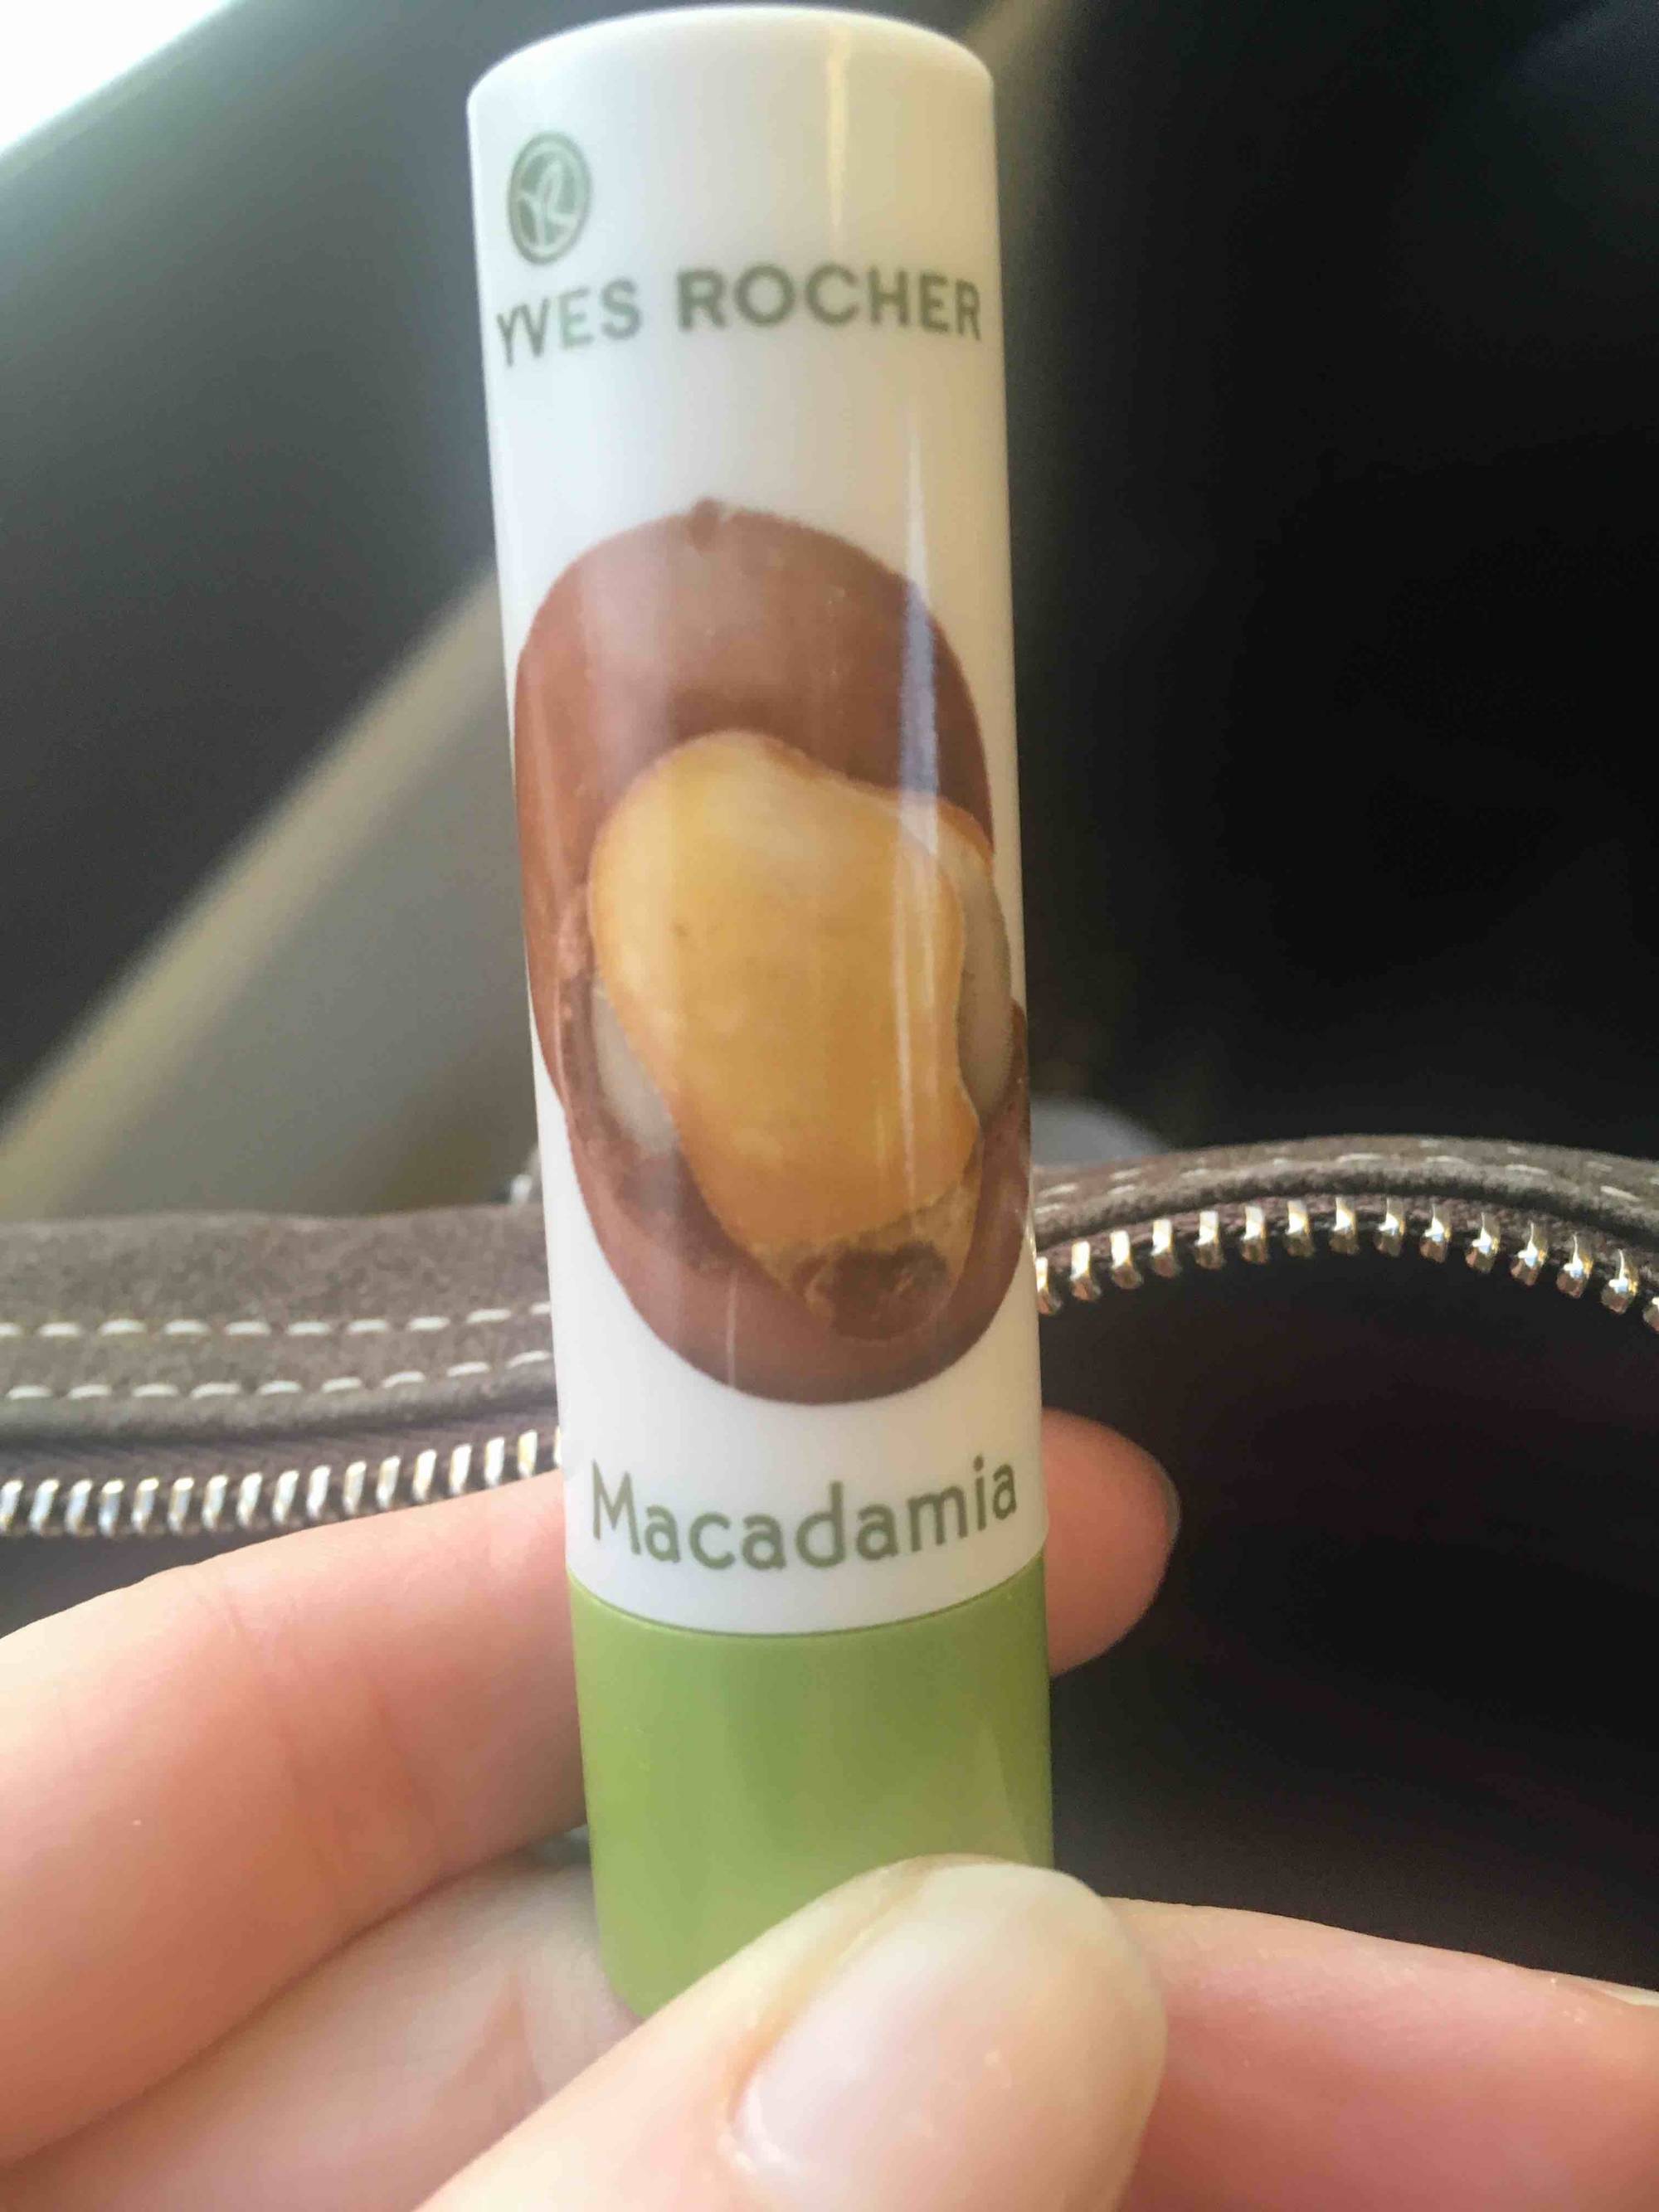 YVES ROCHER - Macadamia - Baume nourrissant protecteur